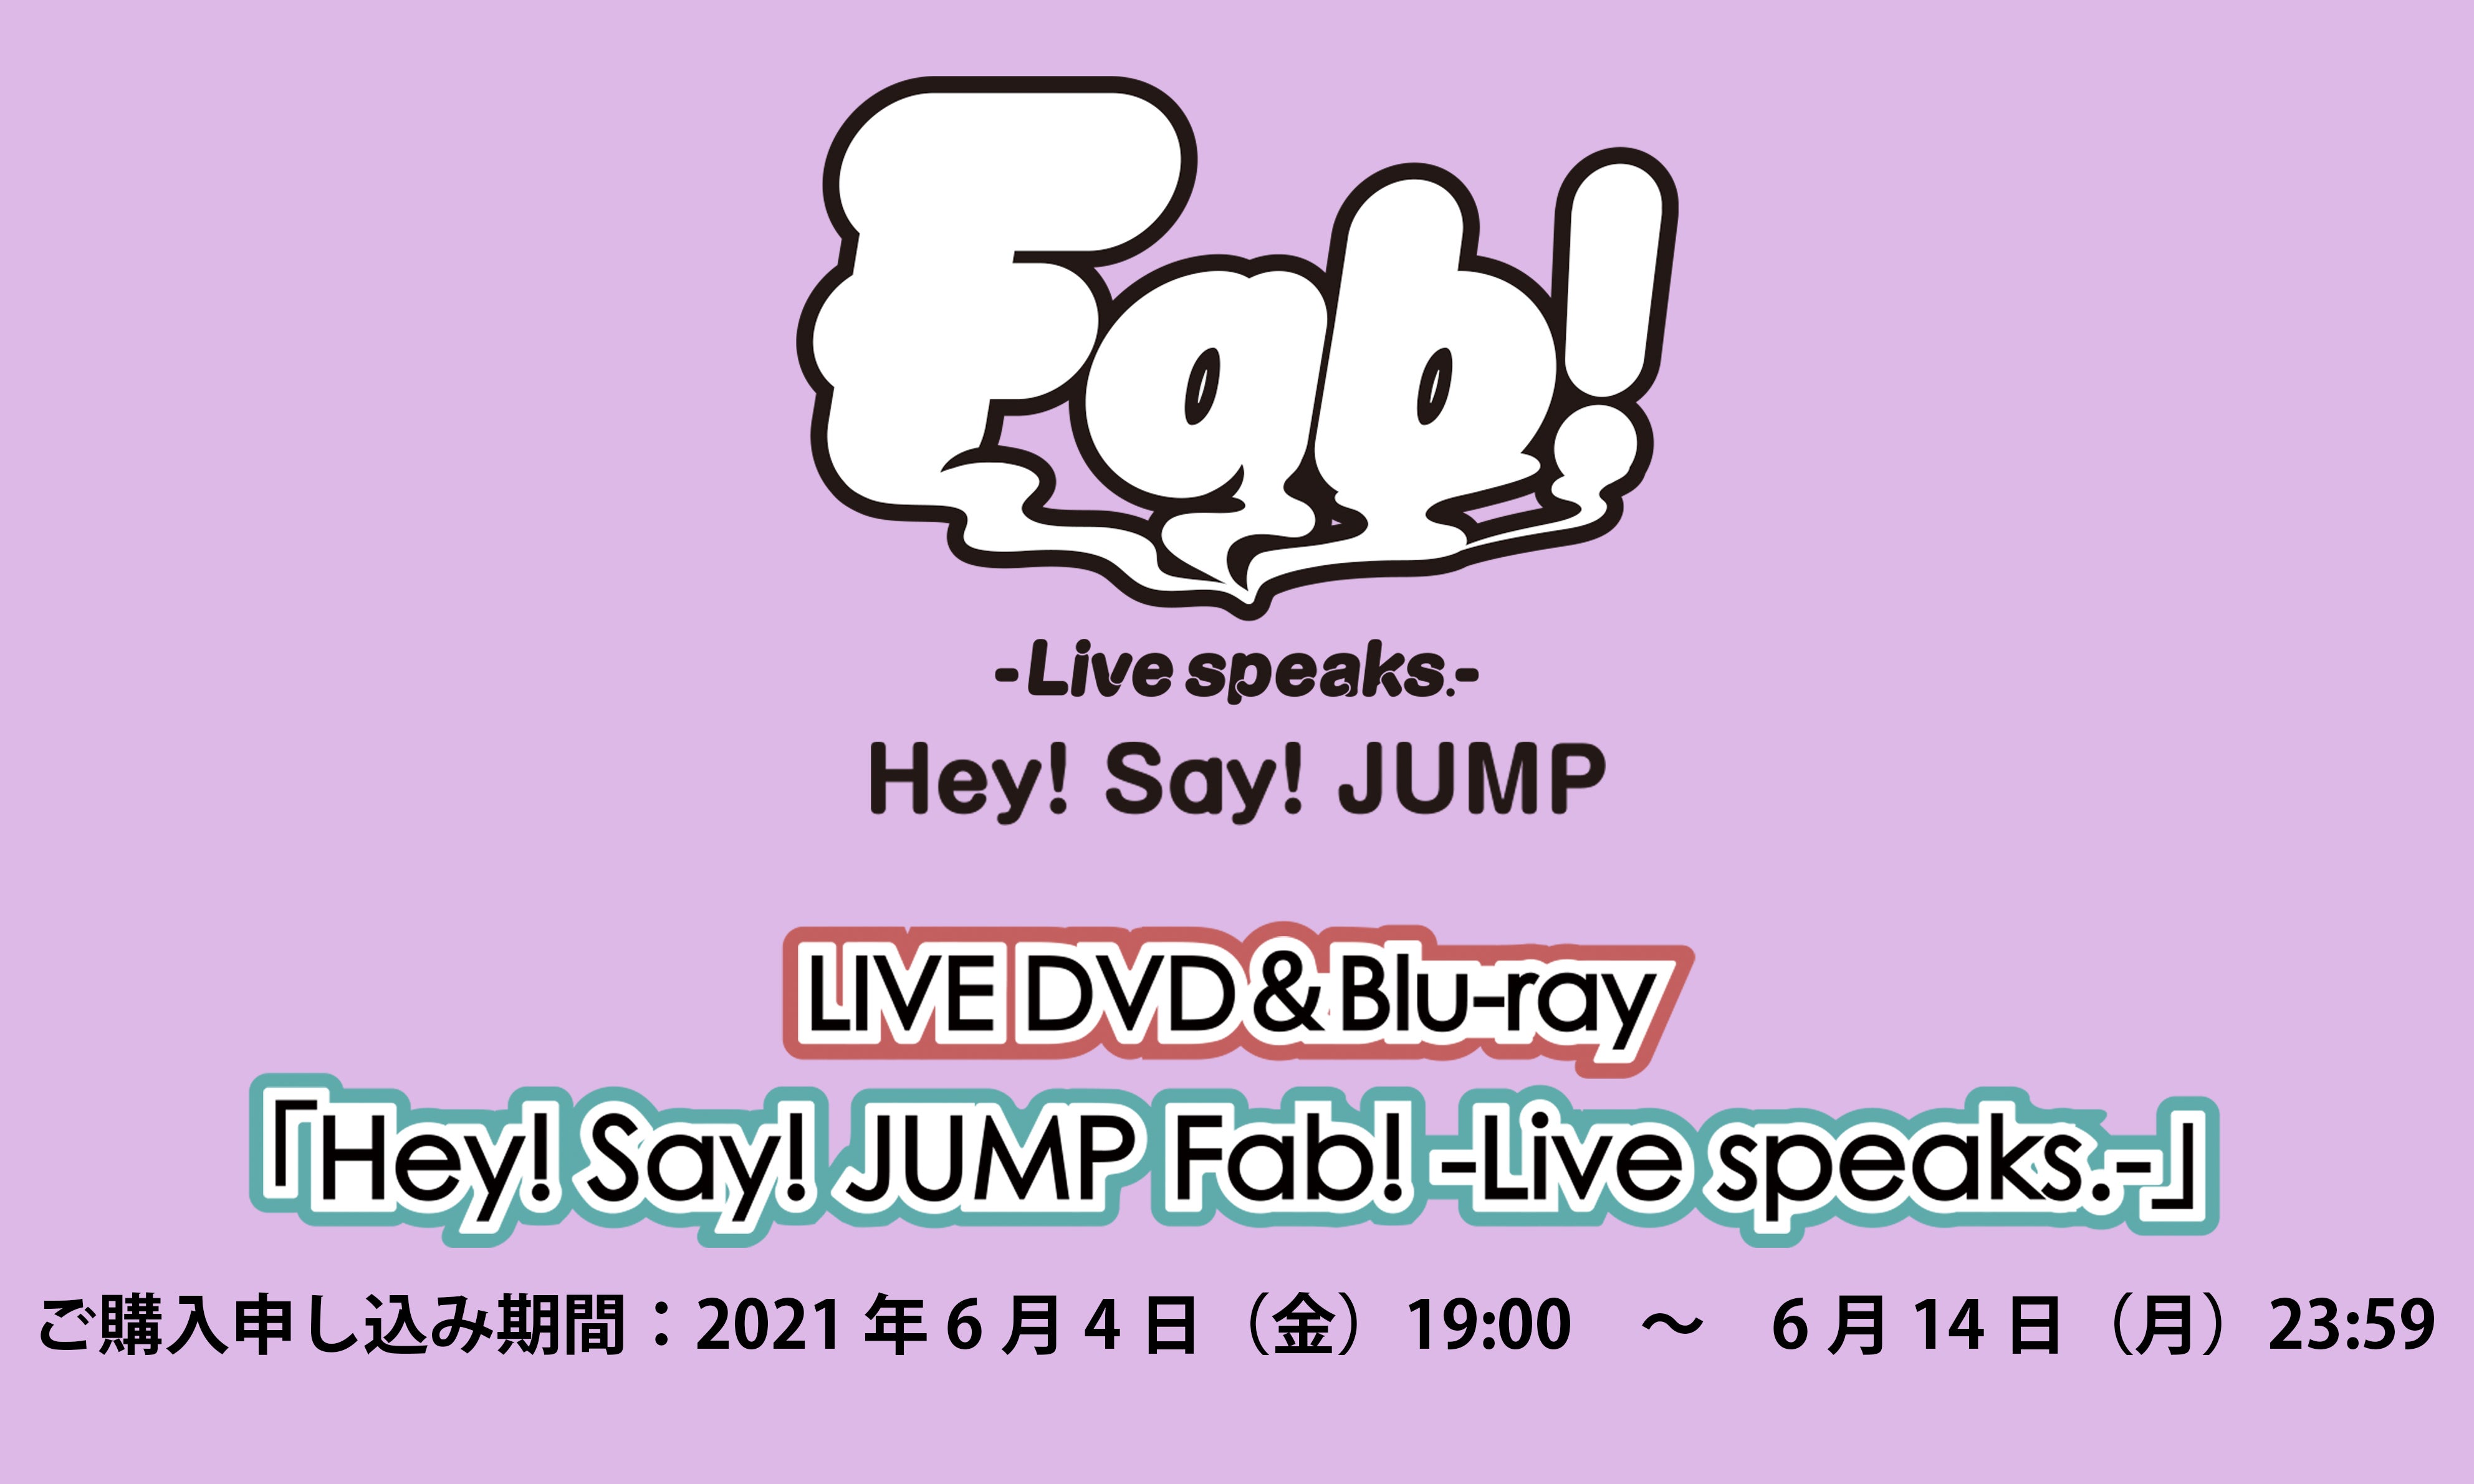 DVD speaks Say! JUMP Live Fab Hey! - inovix.com.br